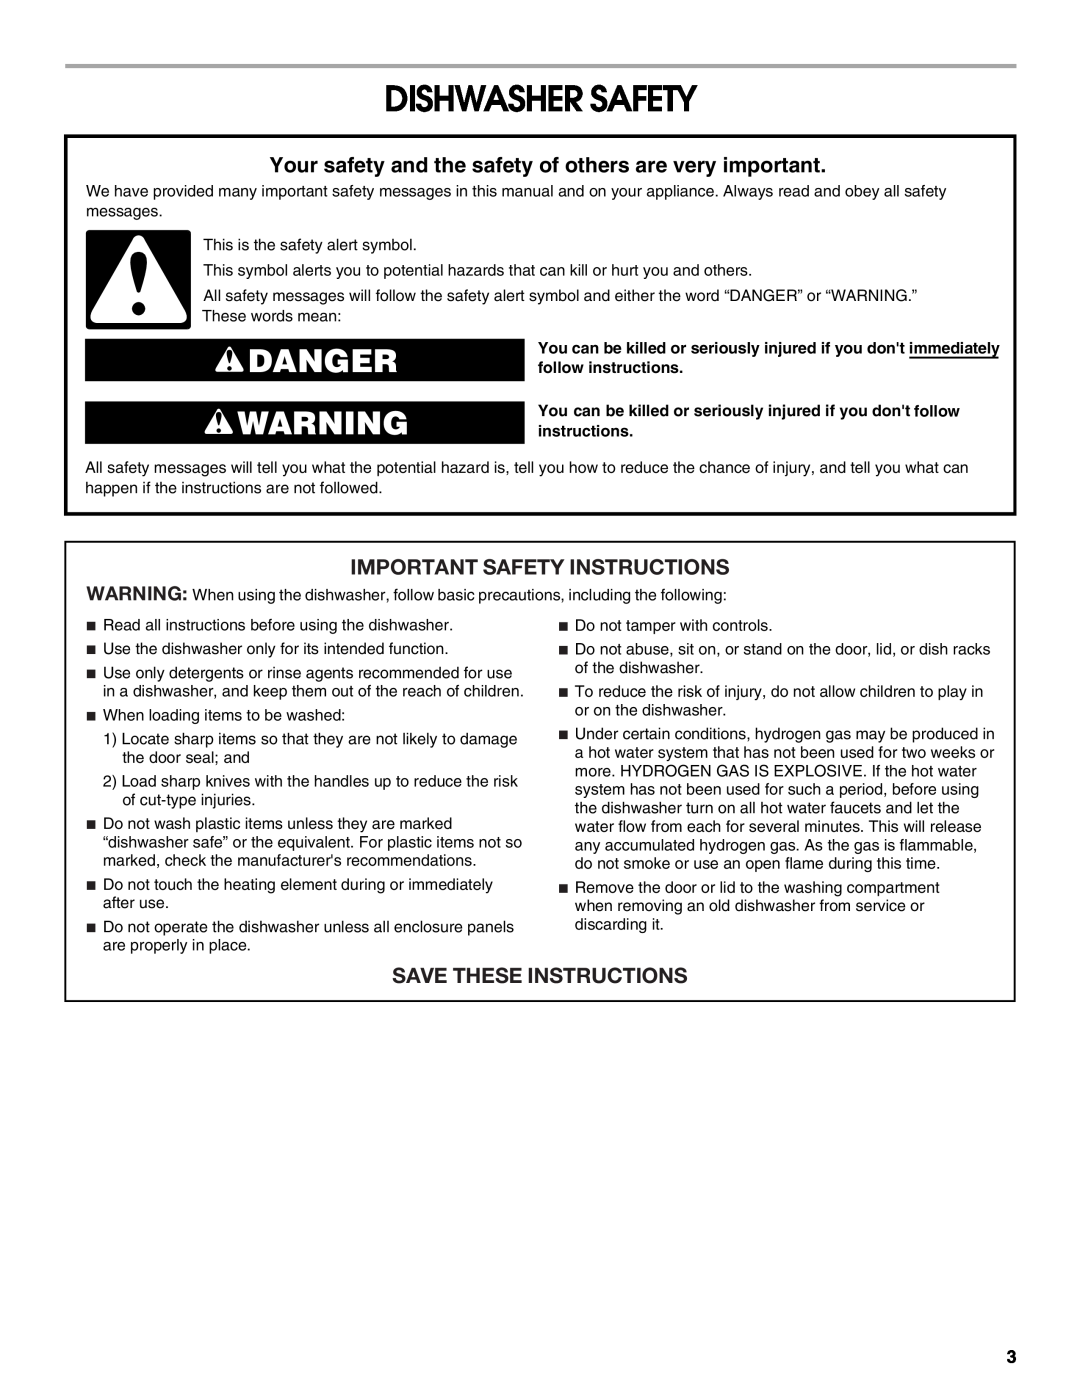 Estate TUD6710, TUD6750 manual Dishwasher Safety, Danger, Important Safety Instructions, Save These Instructions 